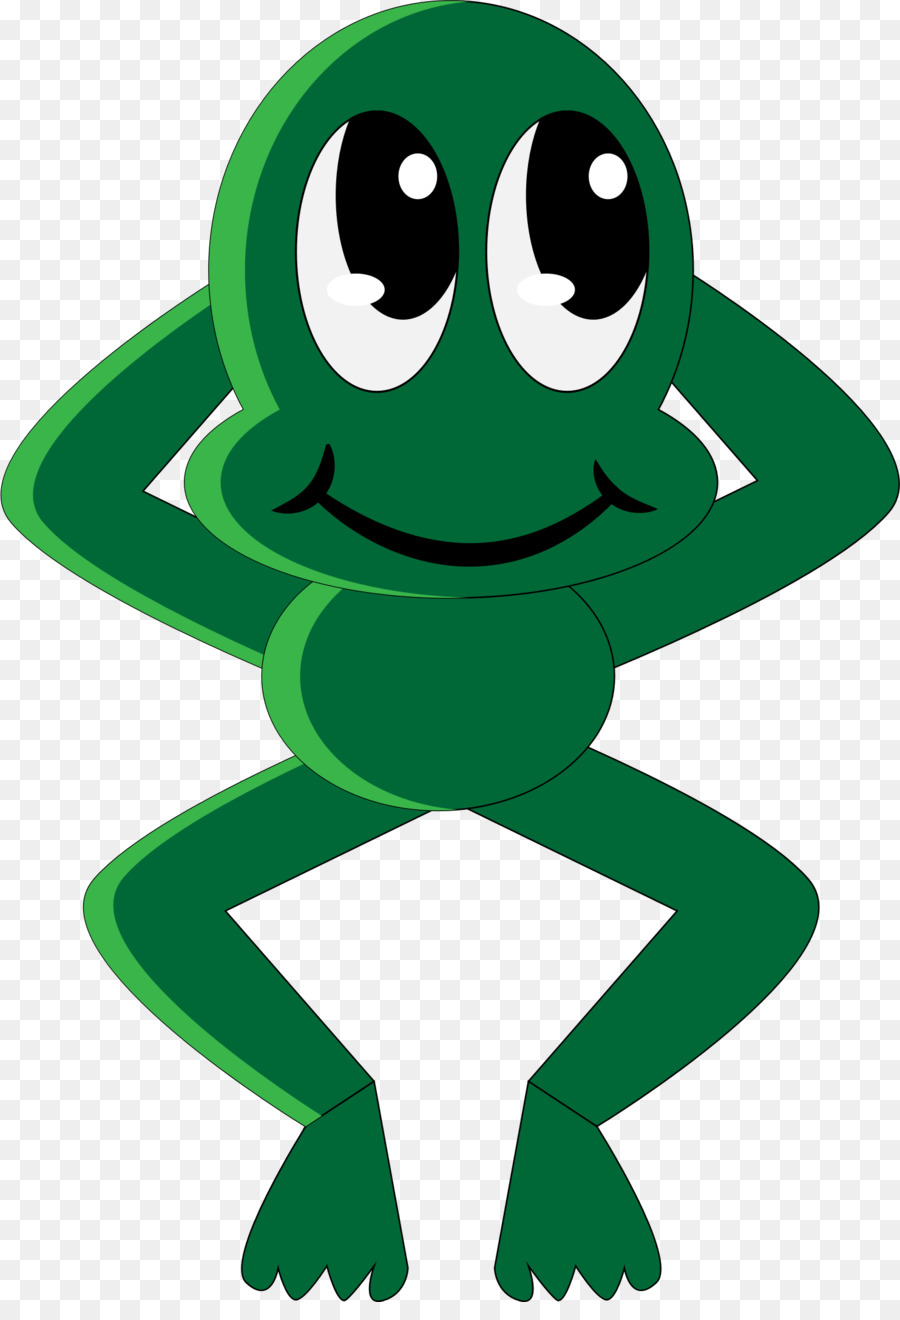 Pepe the frog.